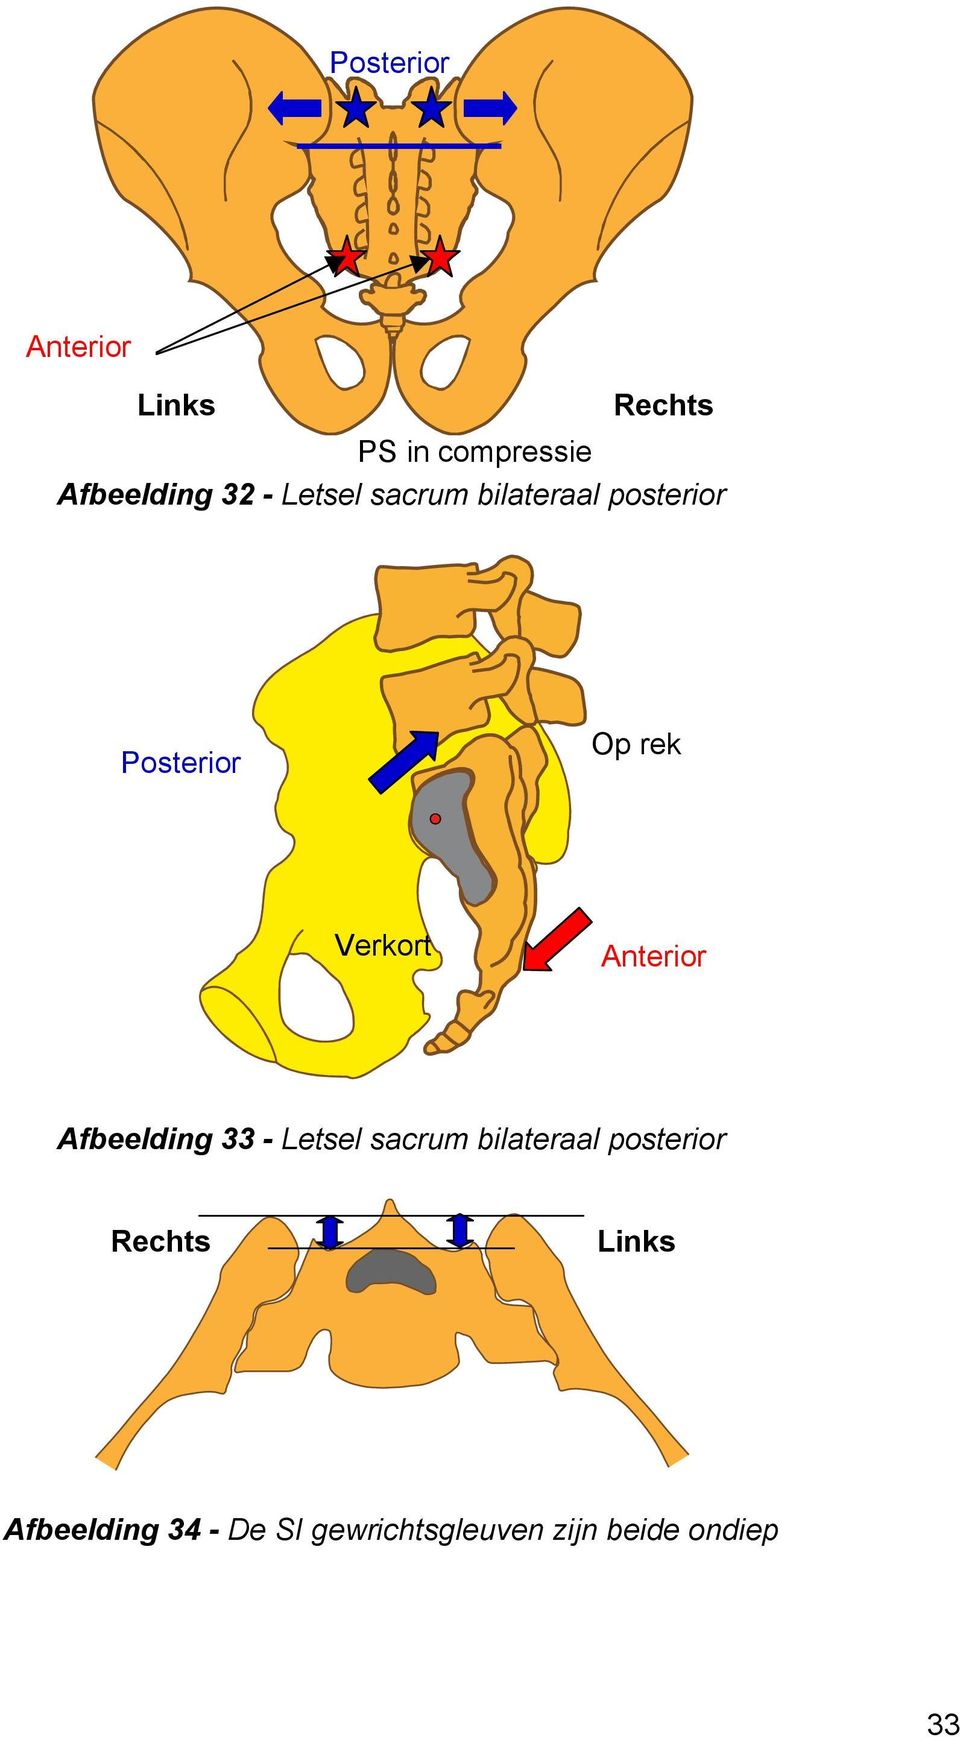 Anterior Afbeelding 33 - Letsel sacrum bilateraal posterior